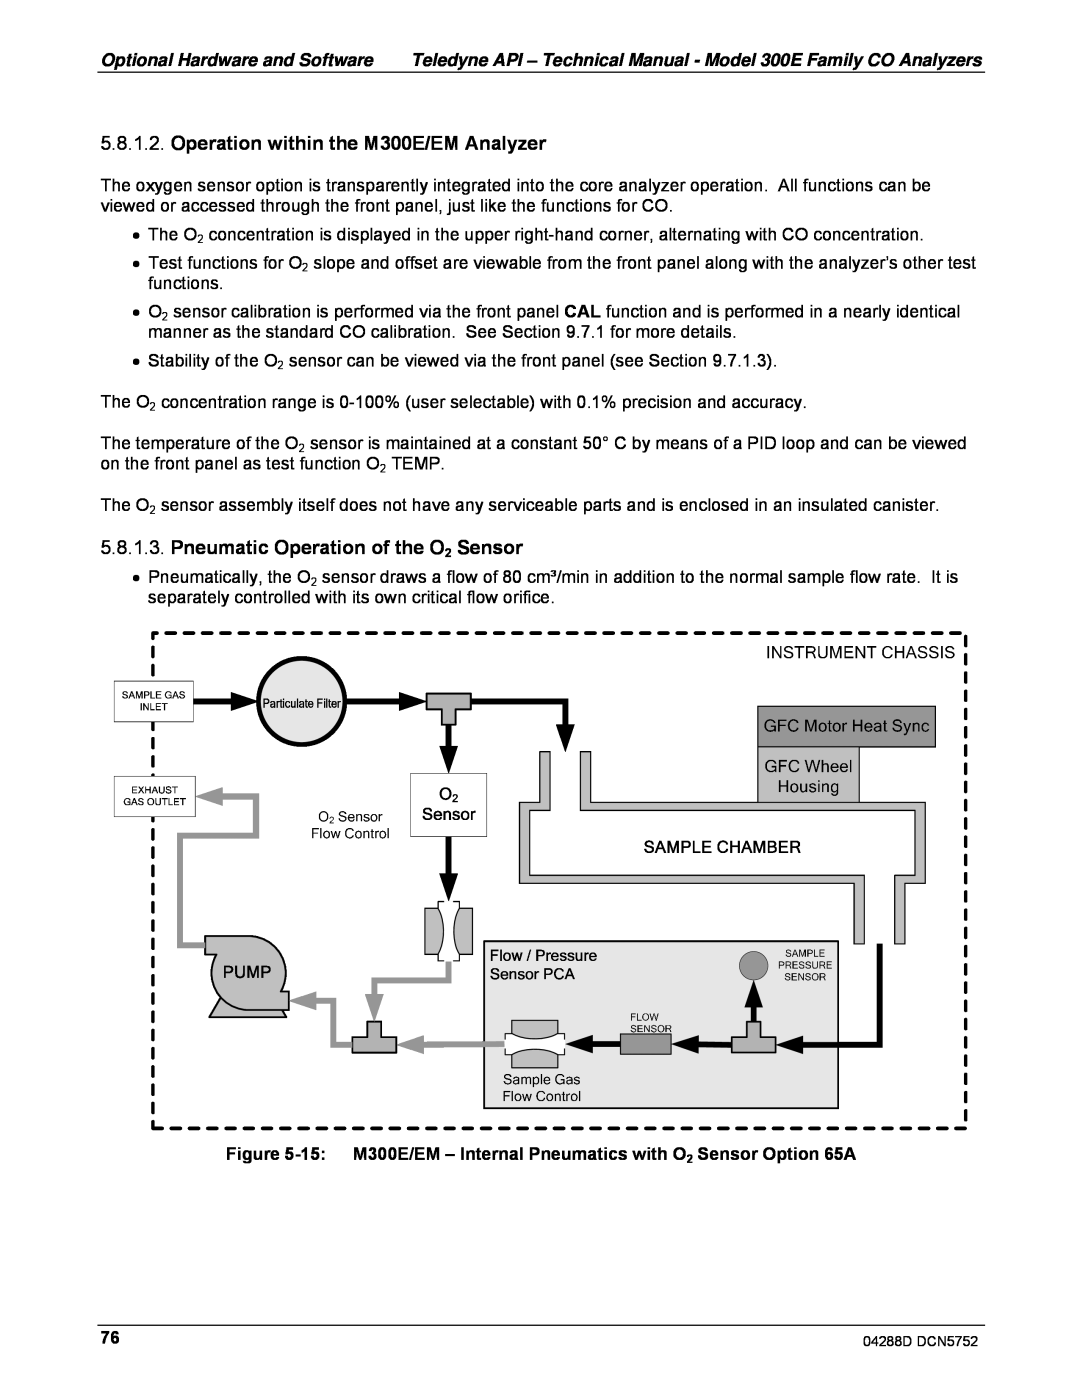 Teledyne M300EM operation manual Operation within the M300E/EM Analyzer, Pneumatic Operation of the O2 Sensor 